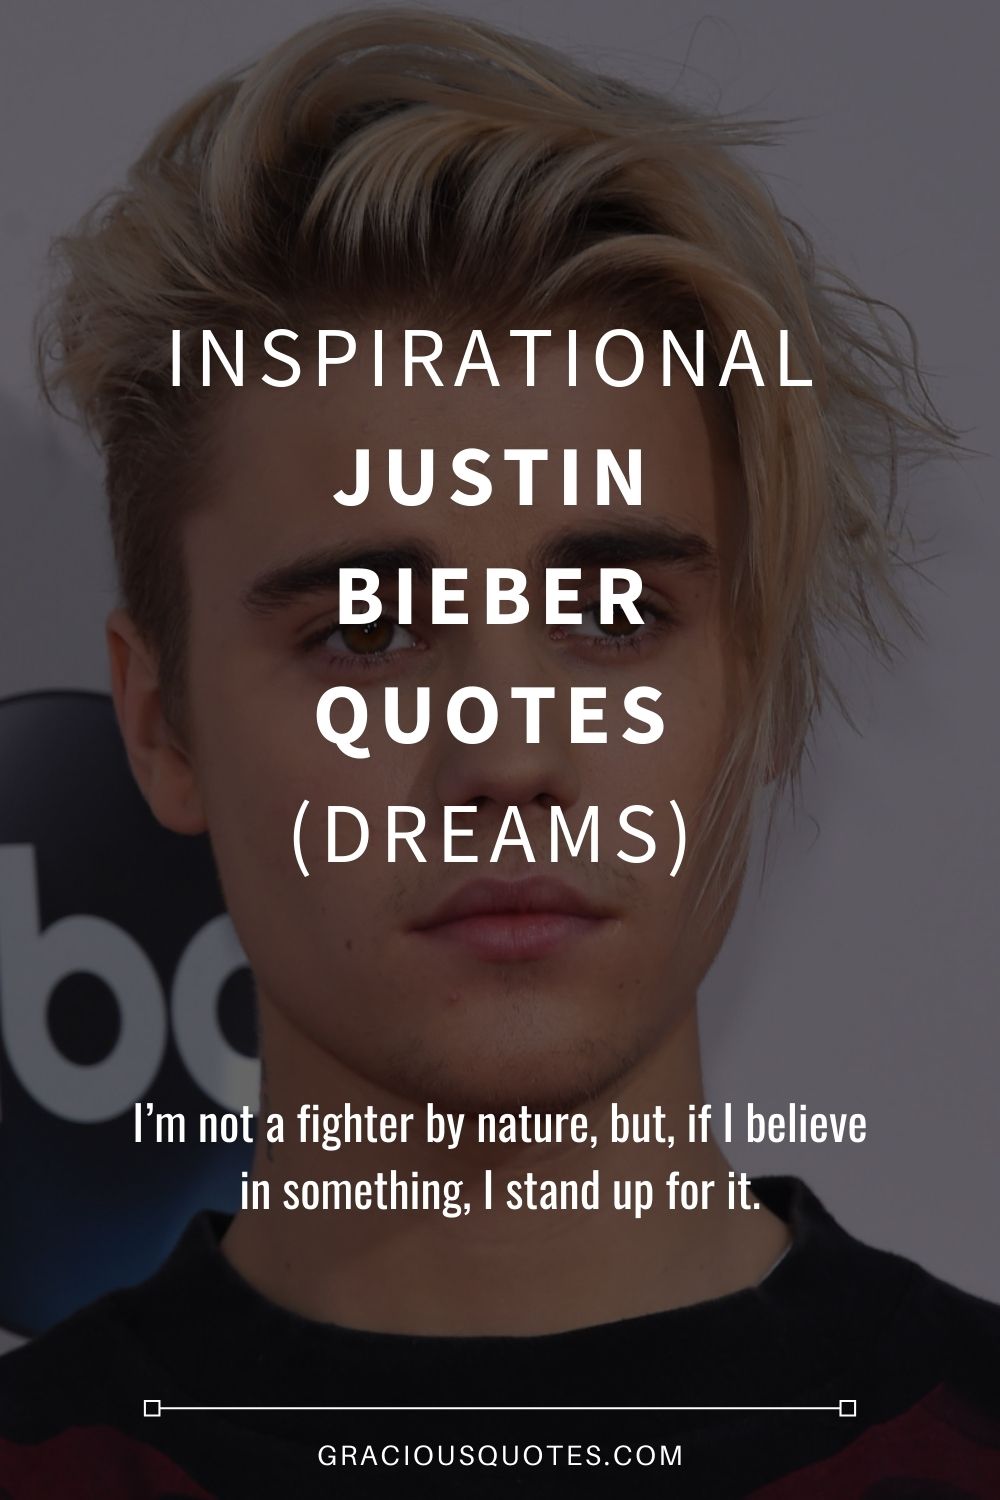 Inspirational Justin Bieber Quotes (DREAMS) - Gracious Quotes